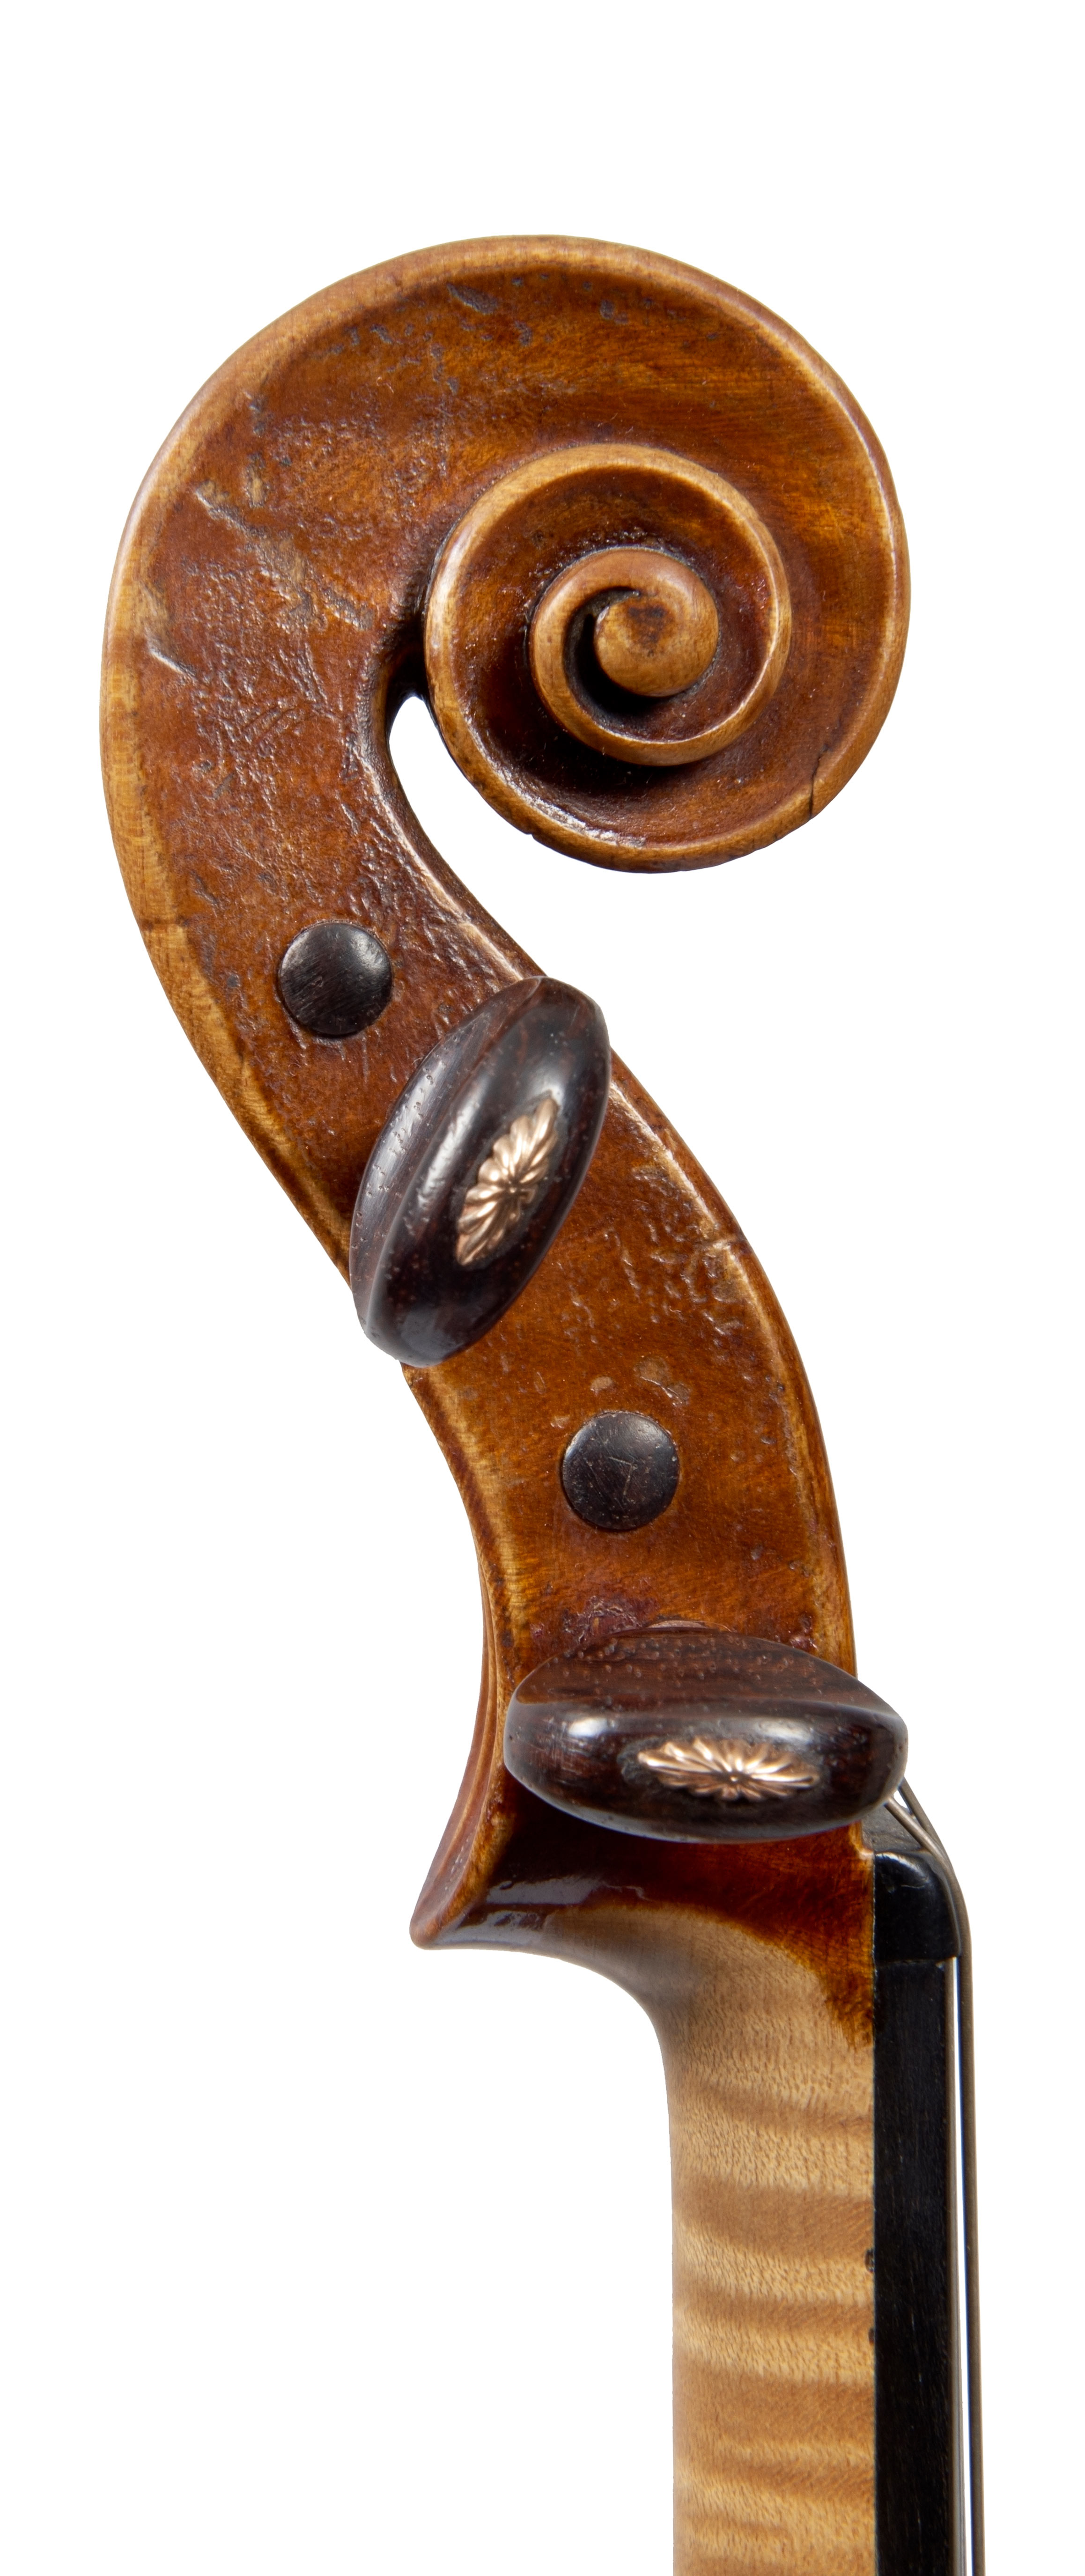 Hr perle Bunke af A violin by François-Louis Pique | Four Centuries Gallery | Ingles & Hayday